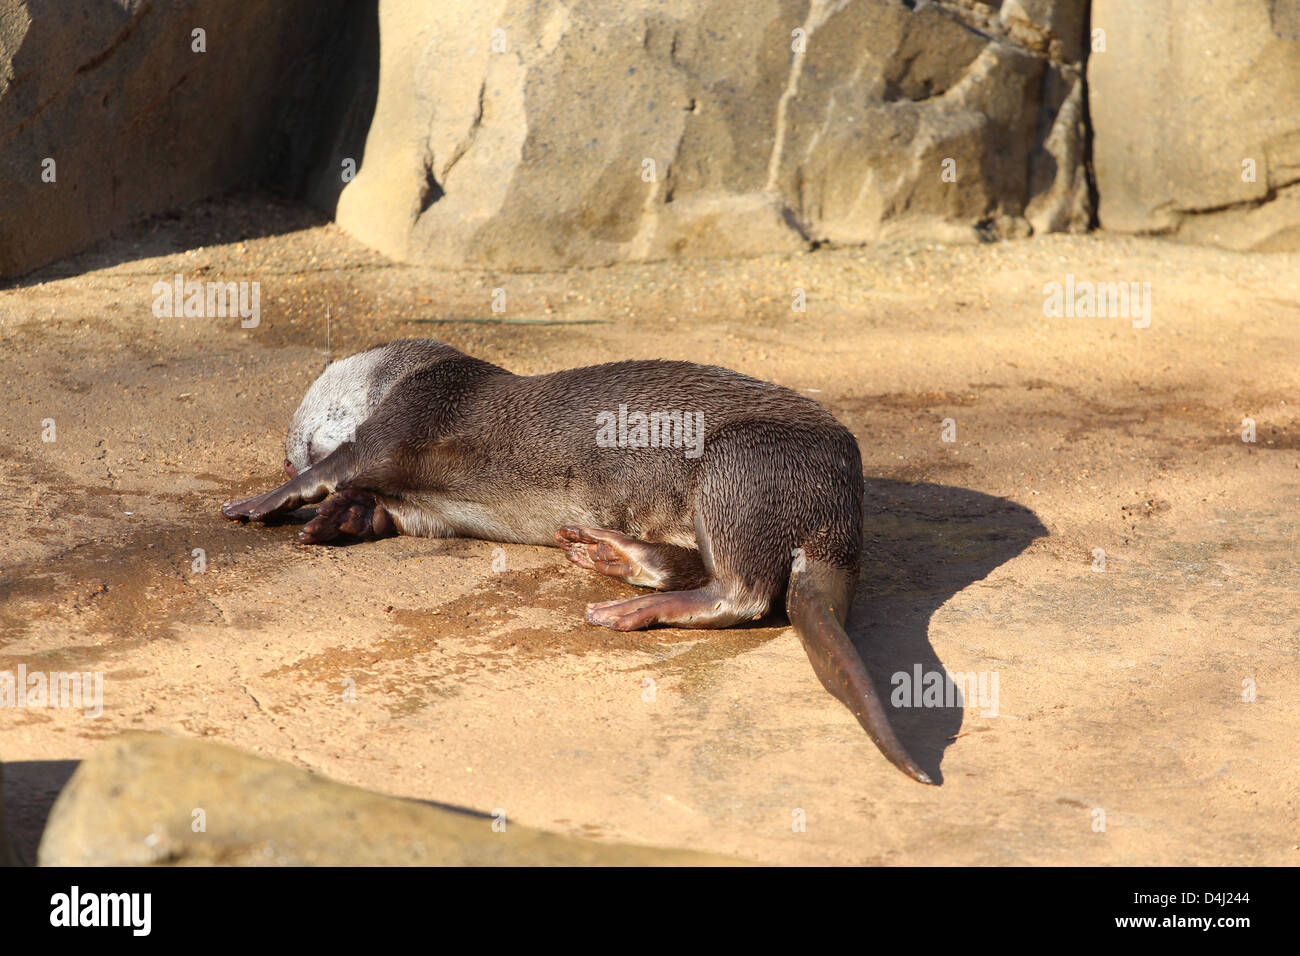 An otter sunbathing after a swim Stock Photo